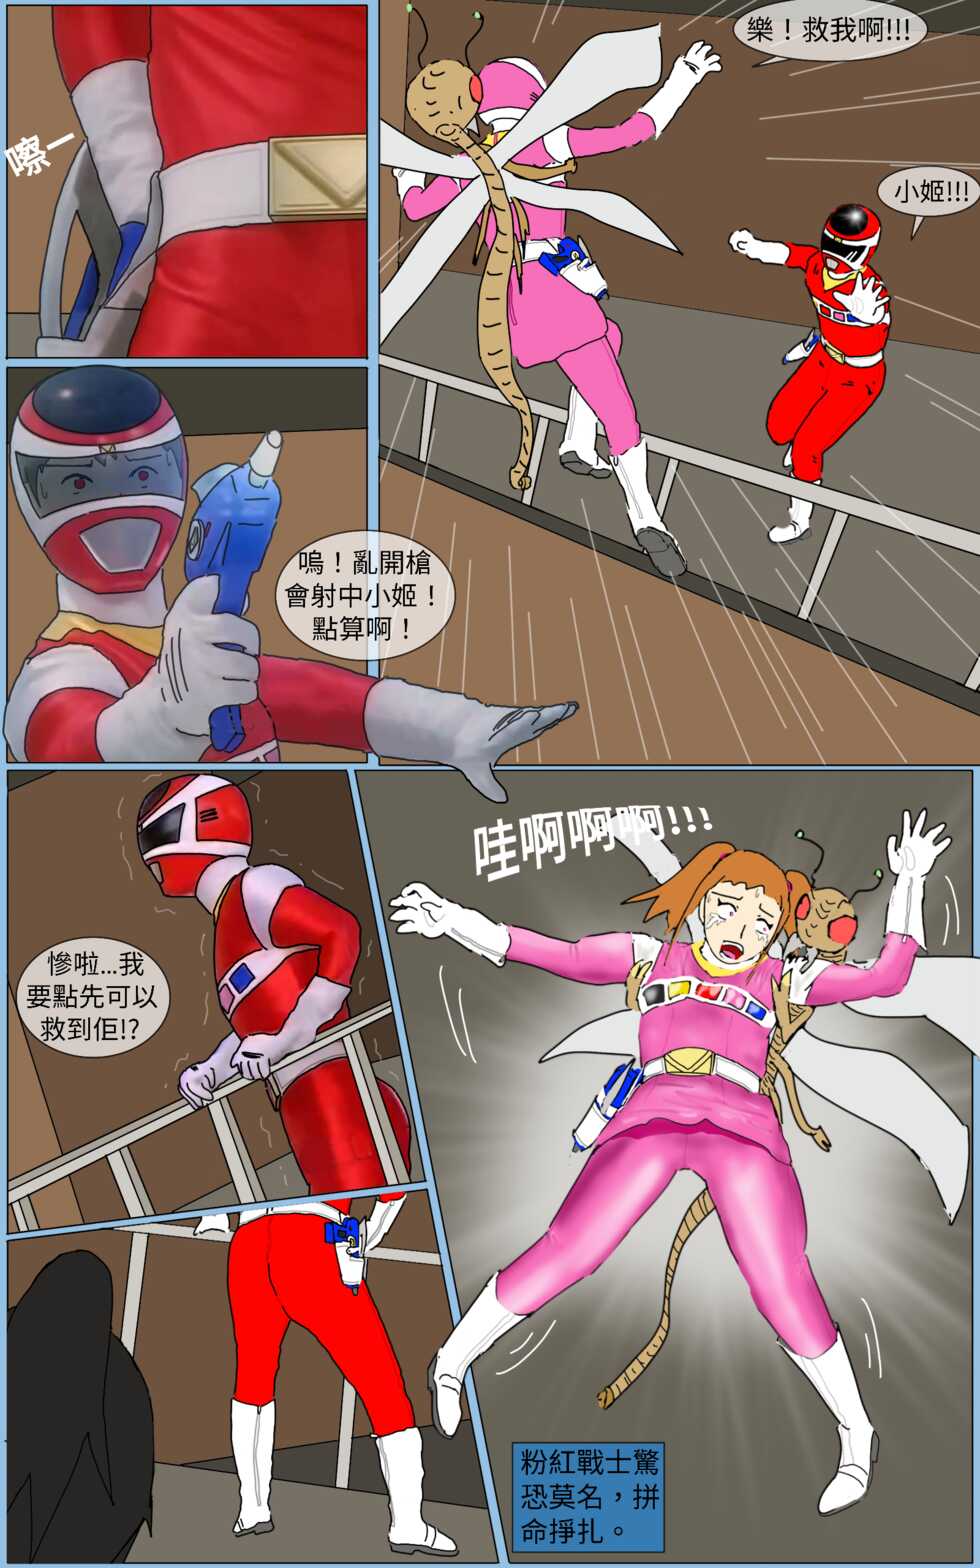 [MA] Mission 31 (Denji Sentai Megaranger) - Page 5